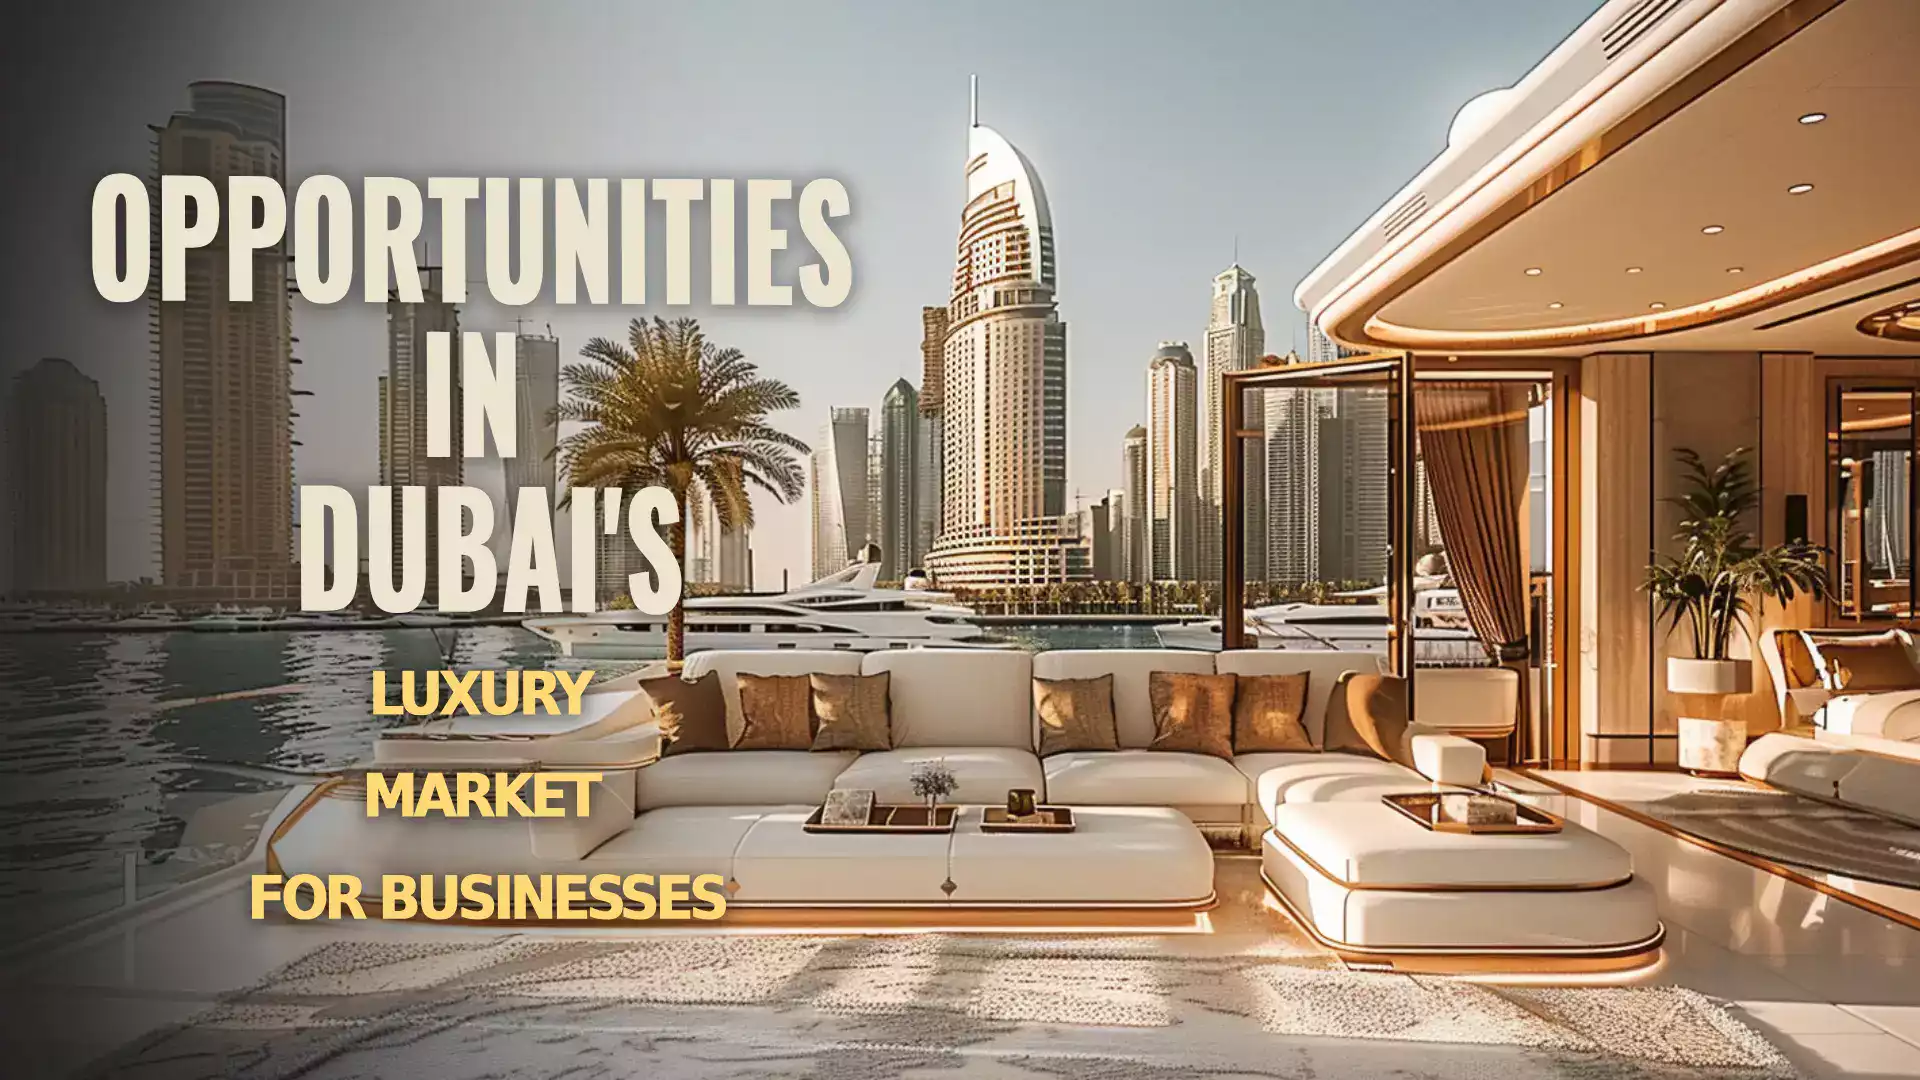 Image showcasing thriving business scene in Dubai, symbolizing lucrative opportunities for entrepreneurs